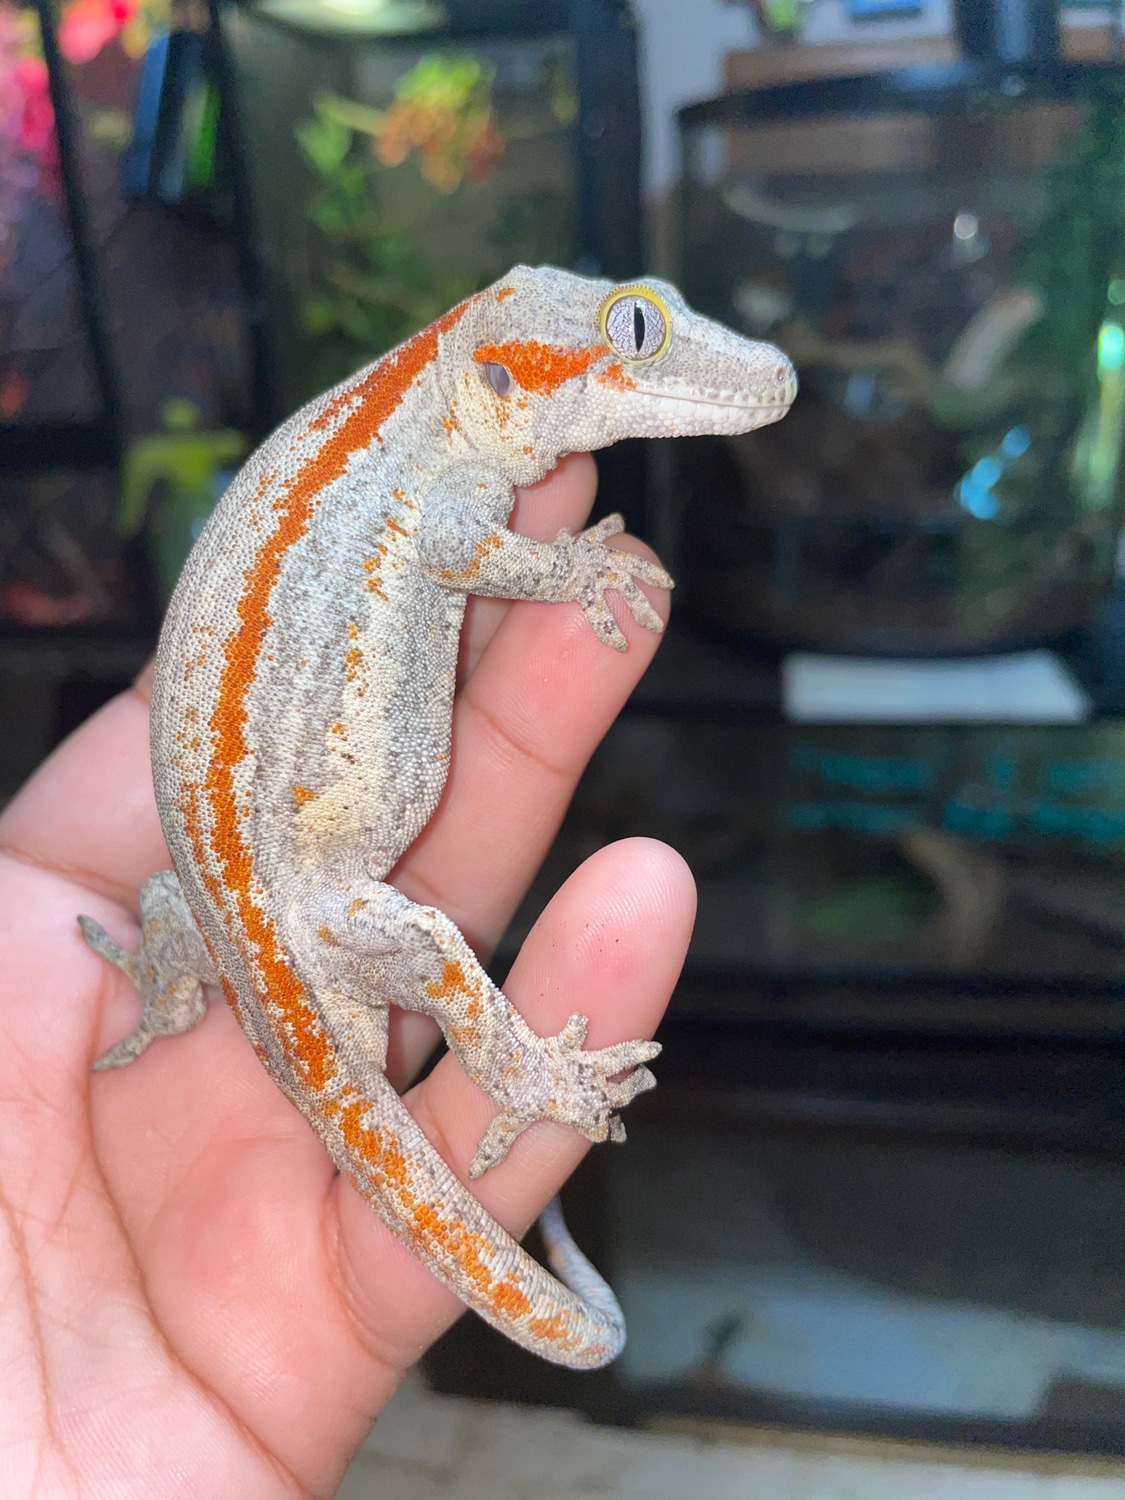 Orange Stripe Gargoyle Gecko by Killer Clutches